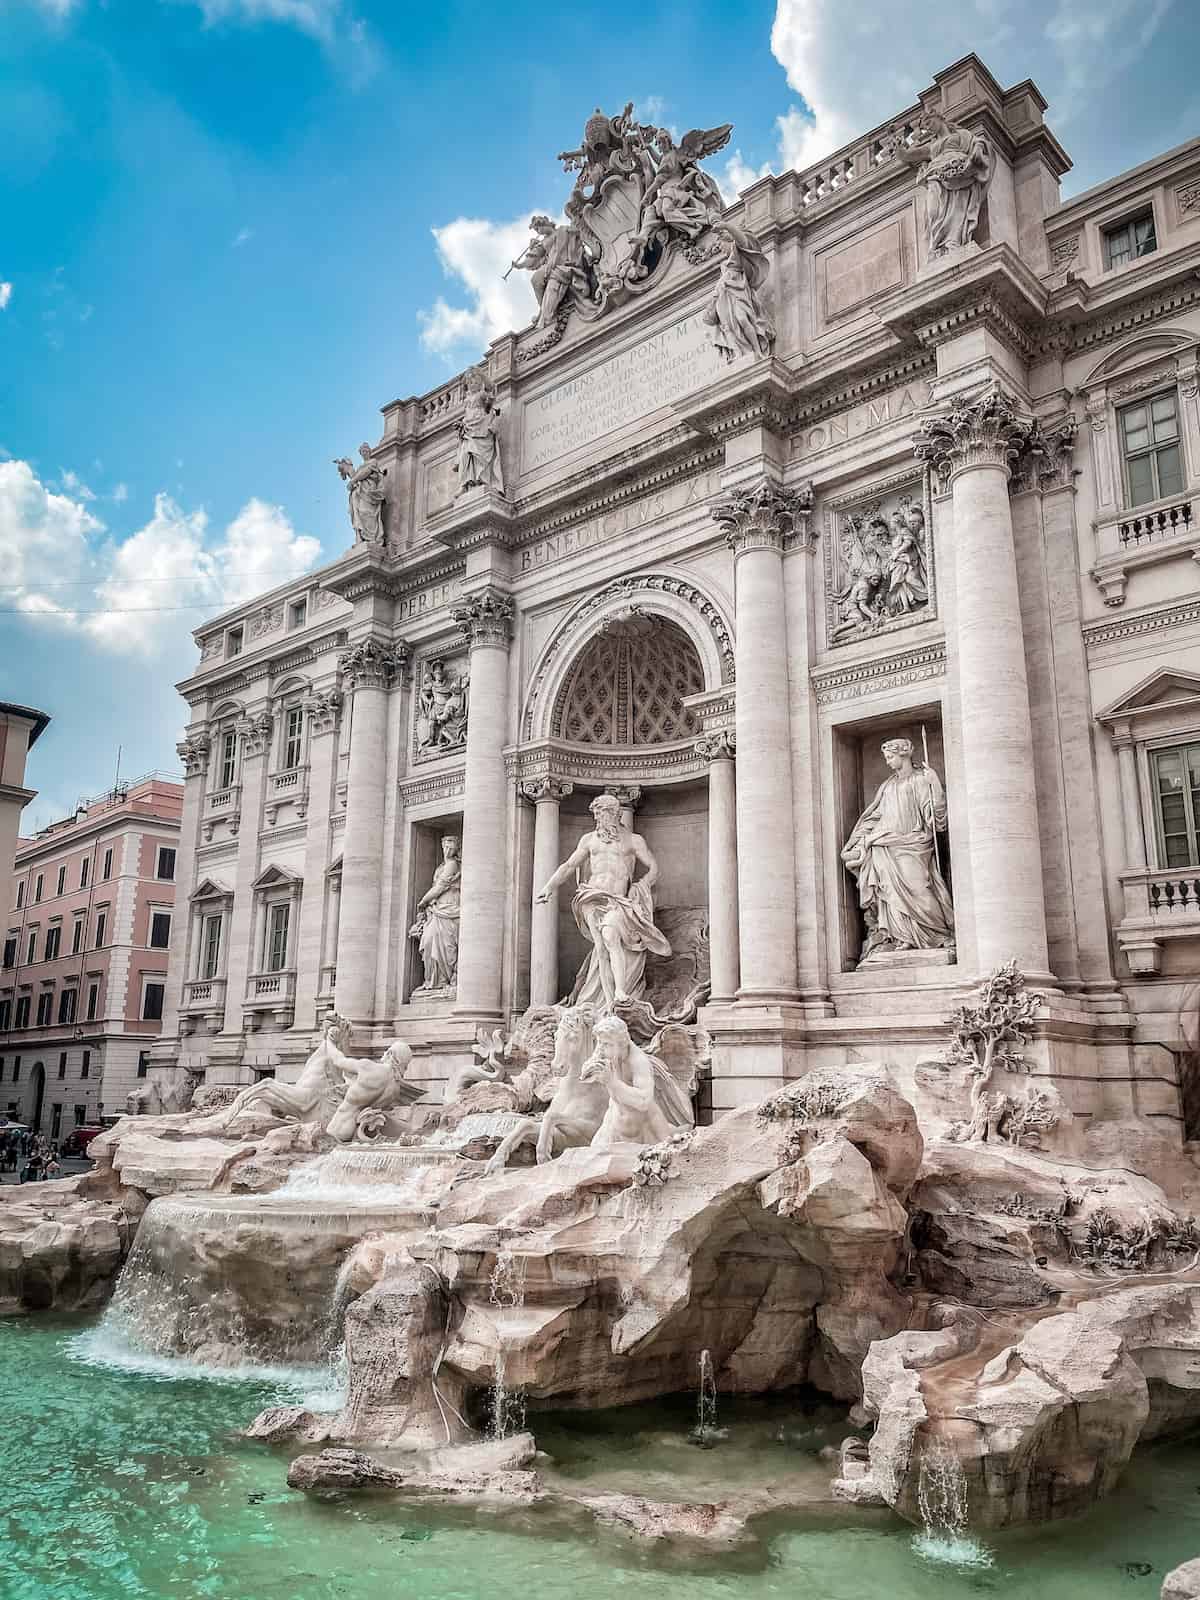 Trevi Fountain in Rome Italy.